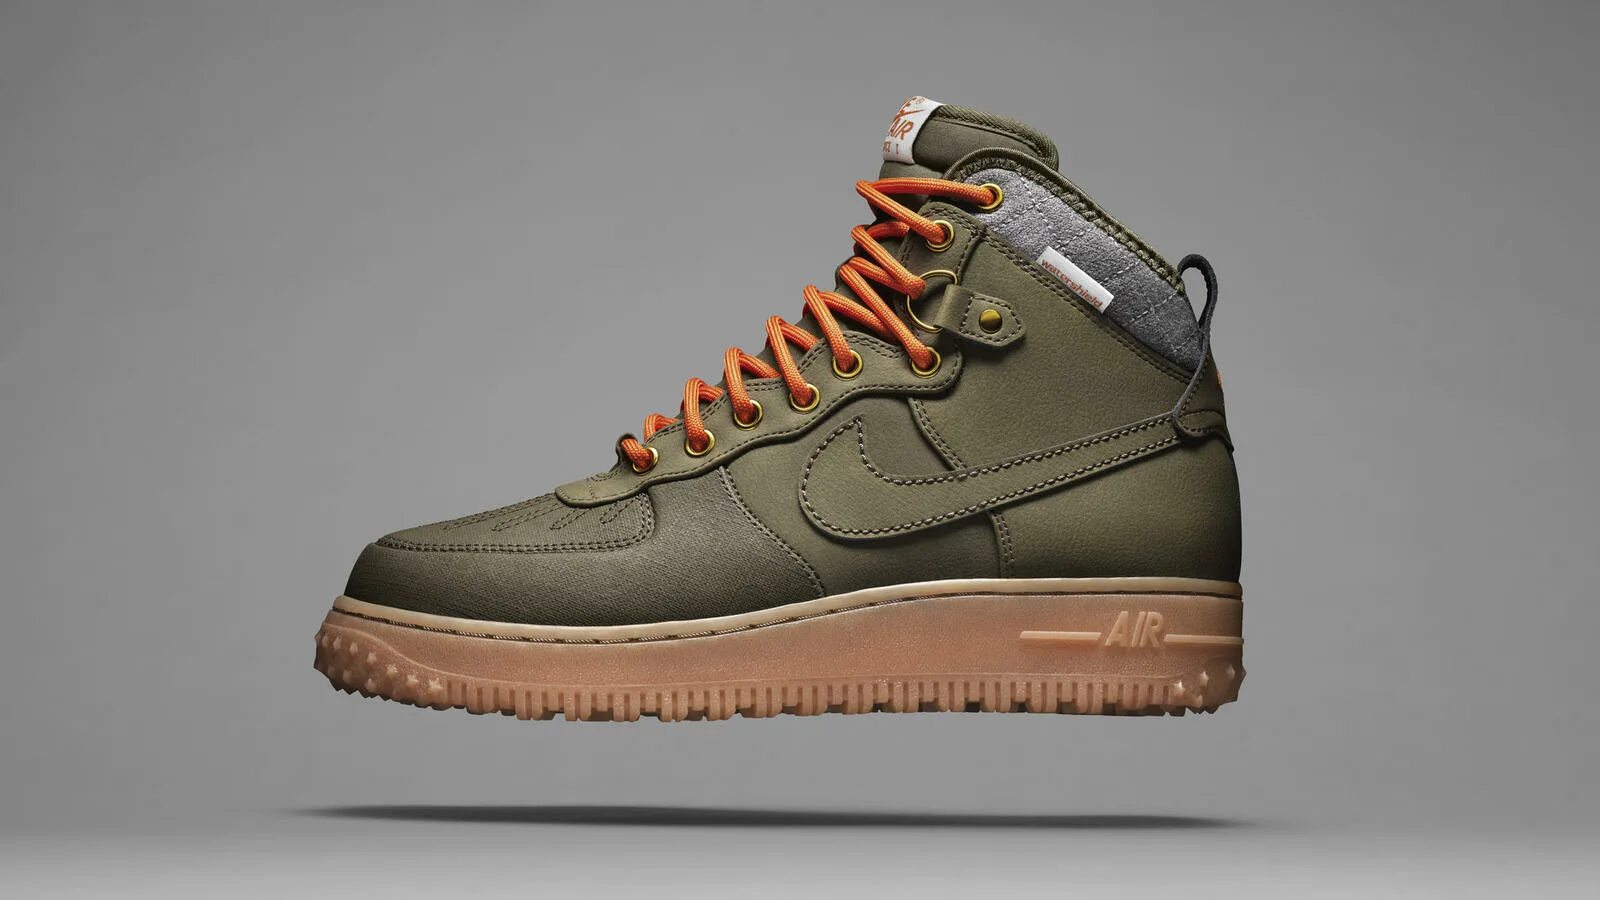 Air Force Nike Sneakerboot. Nike Air Force 1 Boot. ACG Nike Duckboot. Nike Air Force зимние зеленые. Танки кроссовки